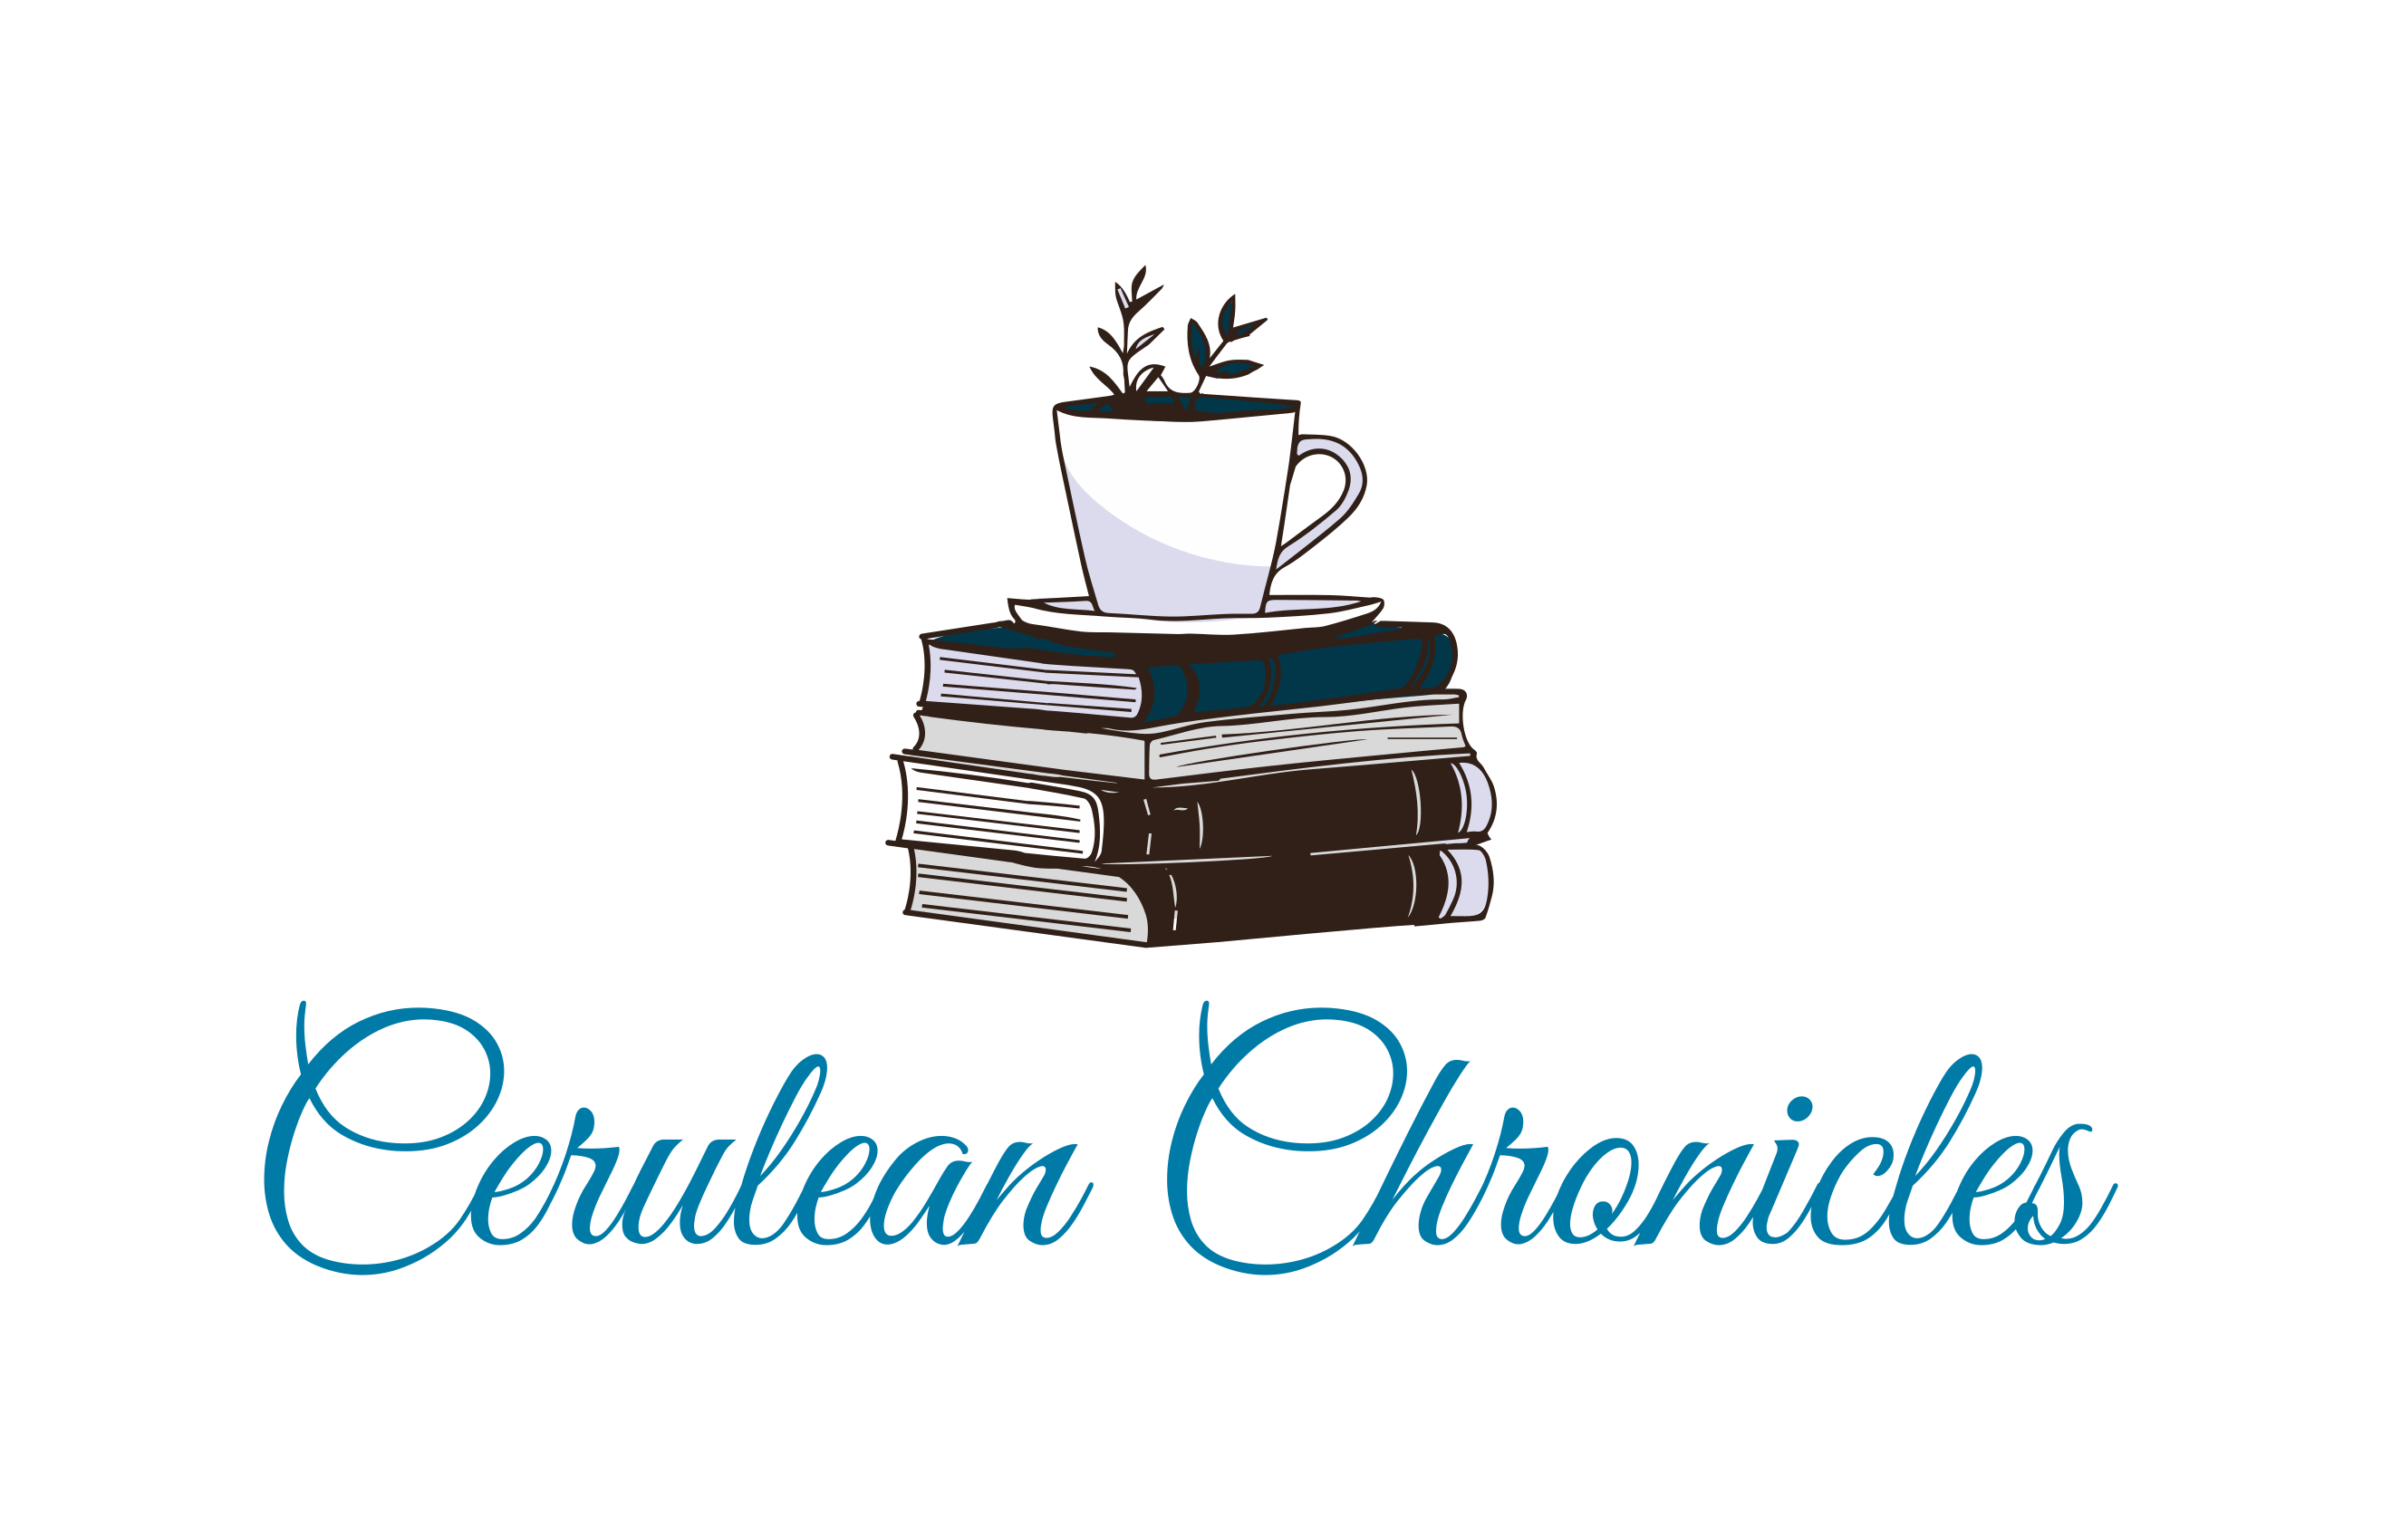 Cerulean Chronicles